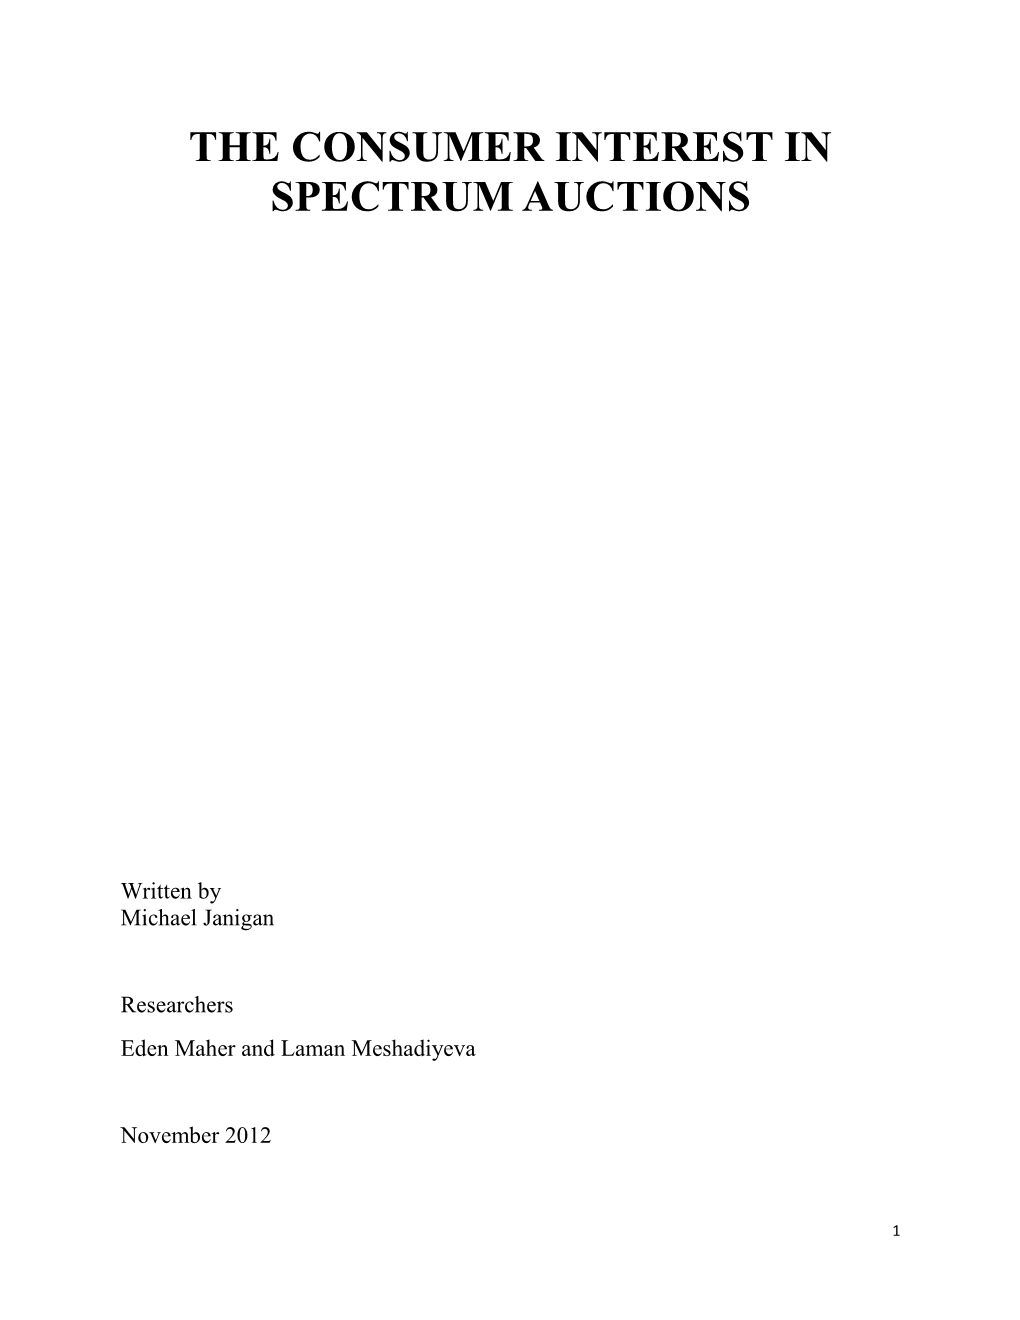 The Consumer Interest in Spectrum Auctions